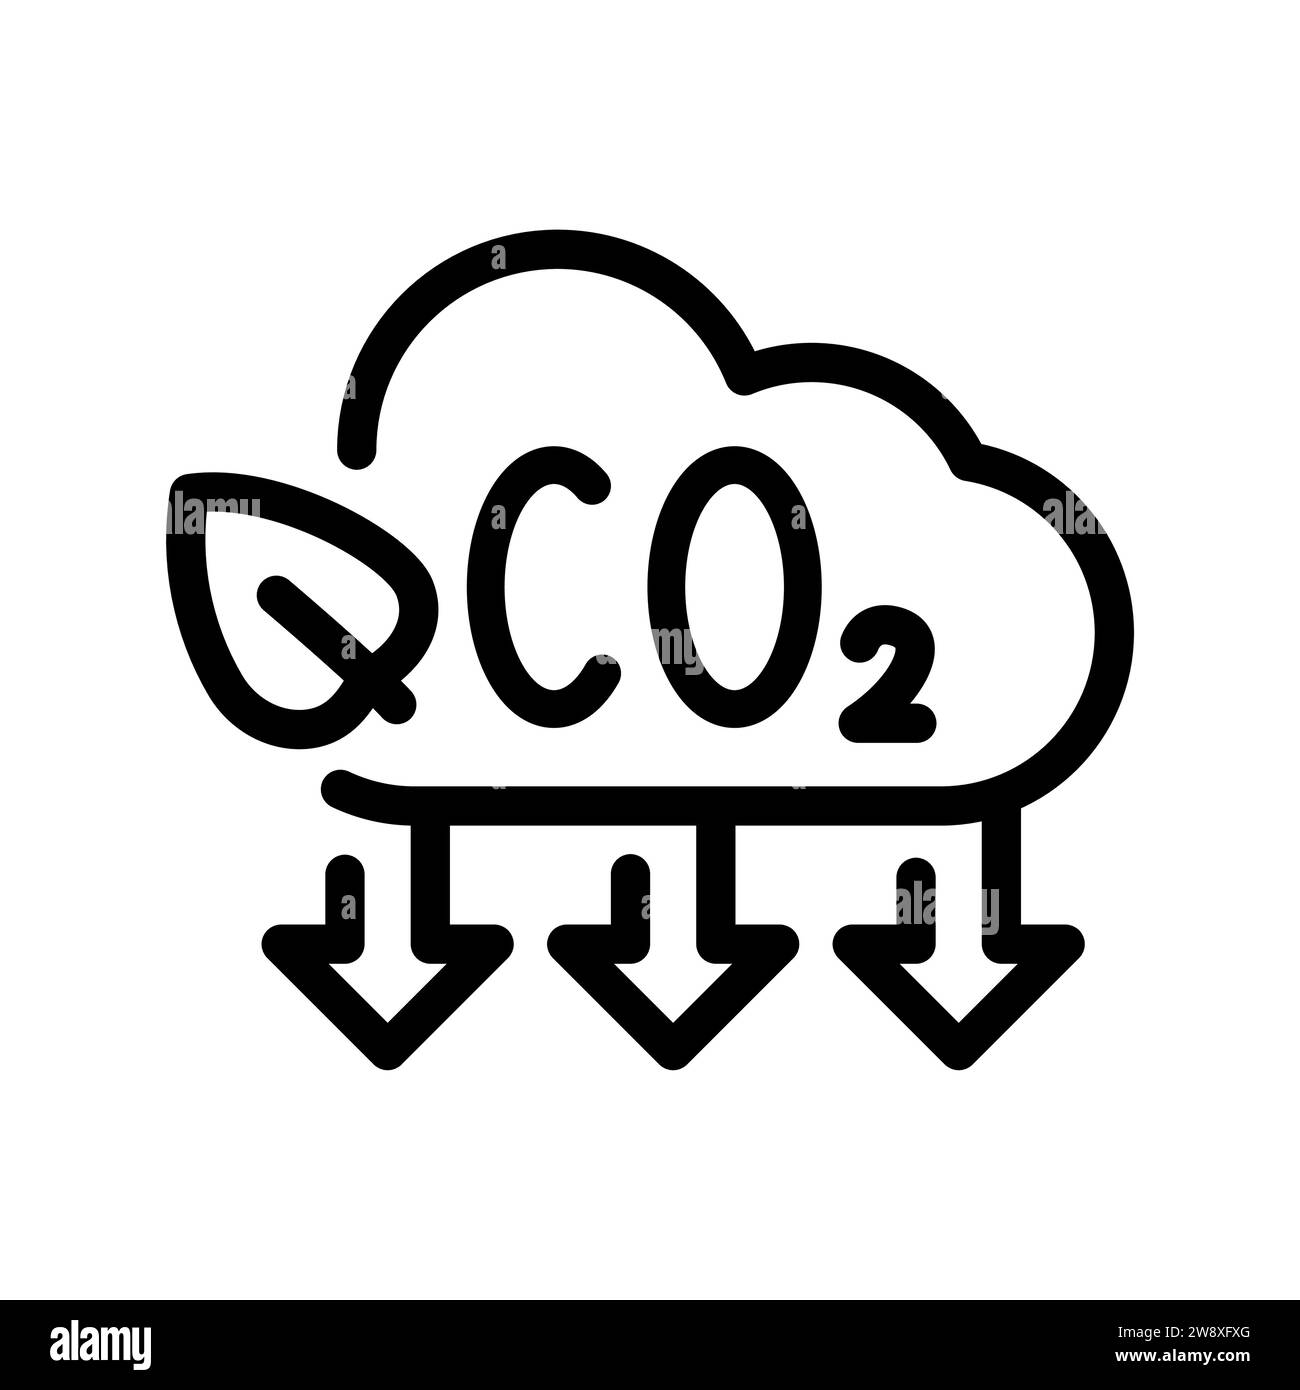 Carbon dioxide gas emission reduction color flat icon. Eco friendly. Zero carbon footprint Stock Vector